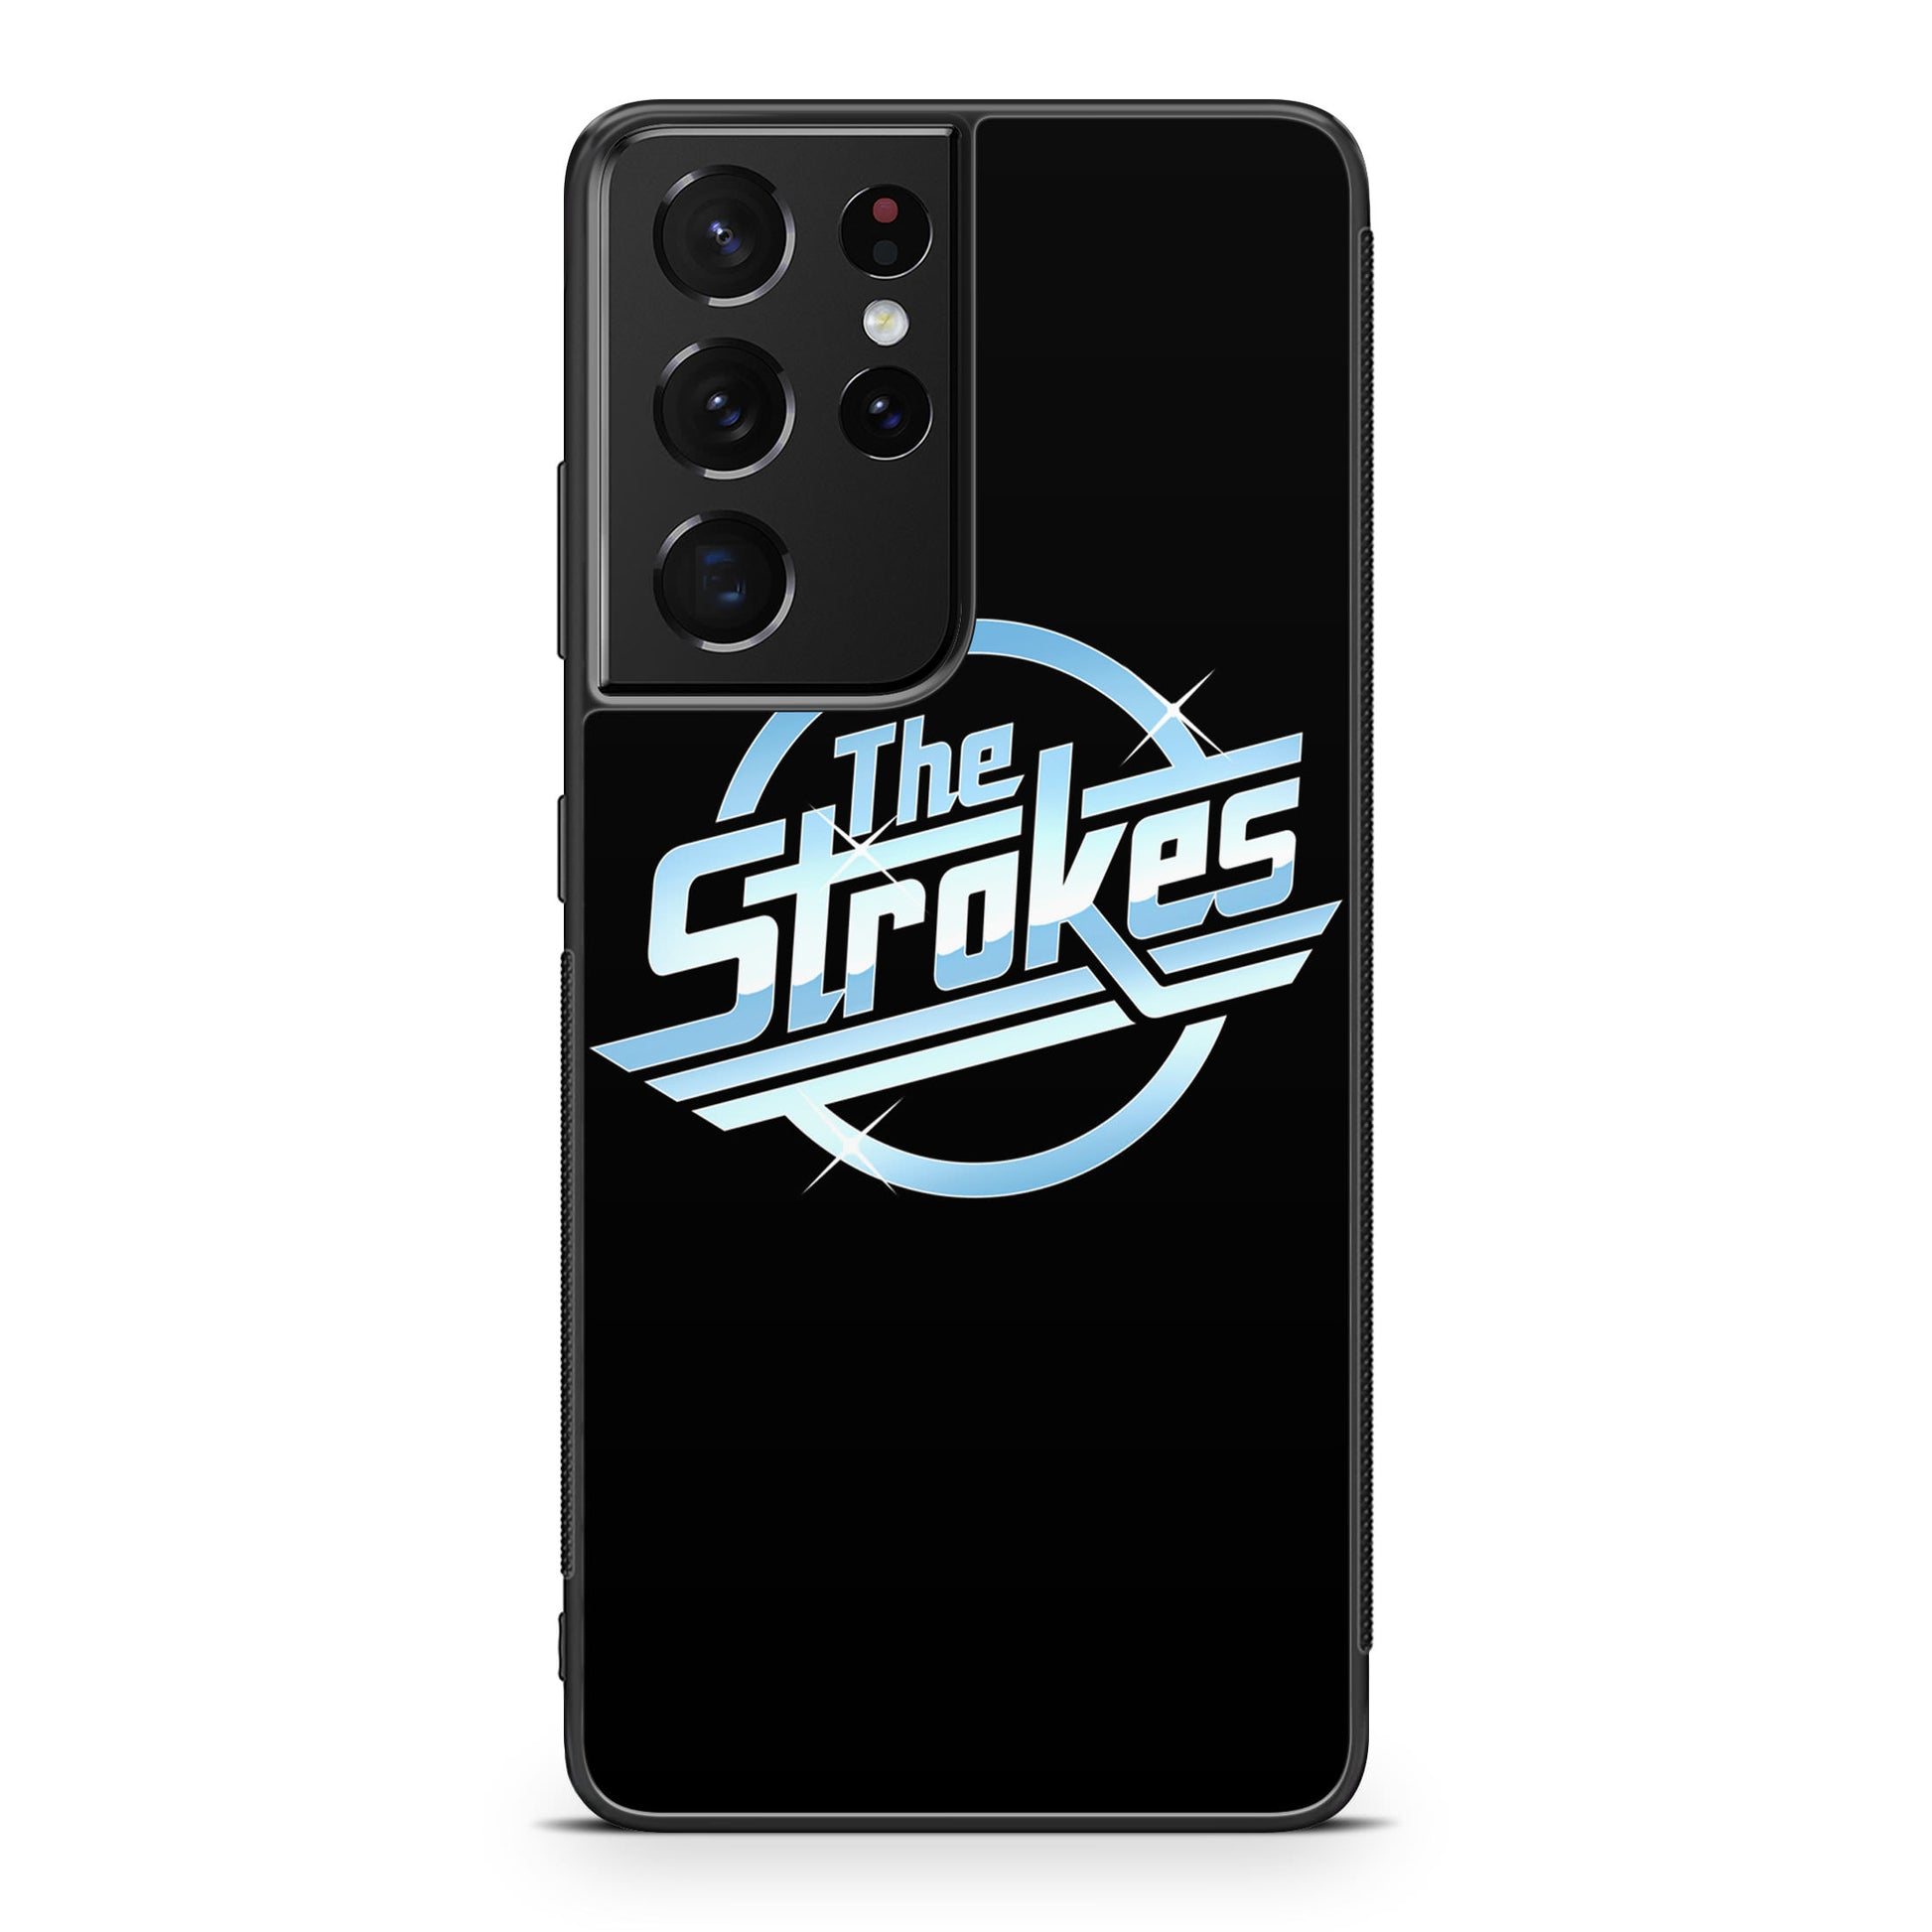 The Strokes Galaxy S21 Ultra Case